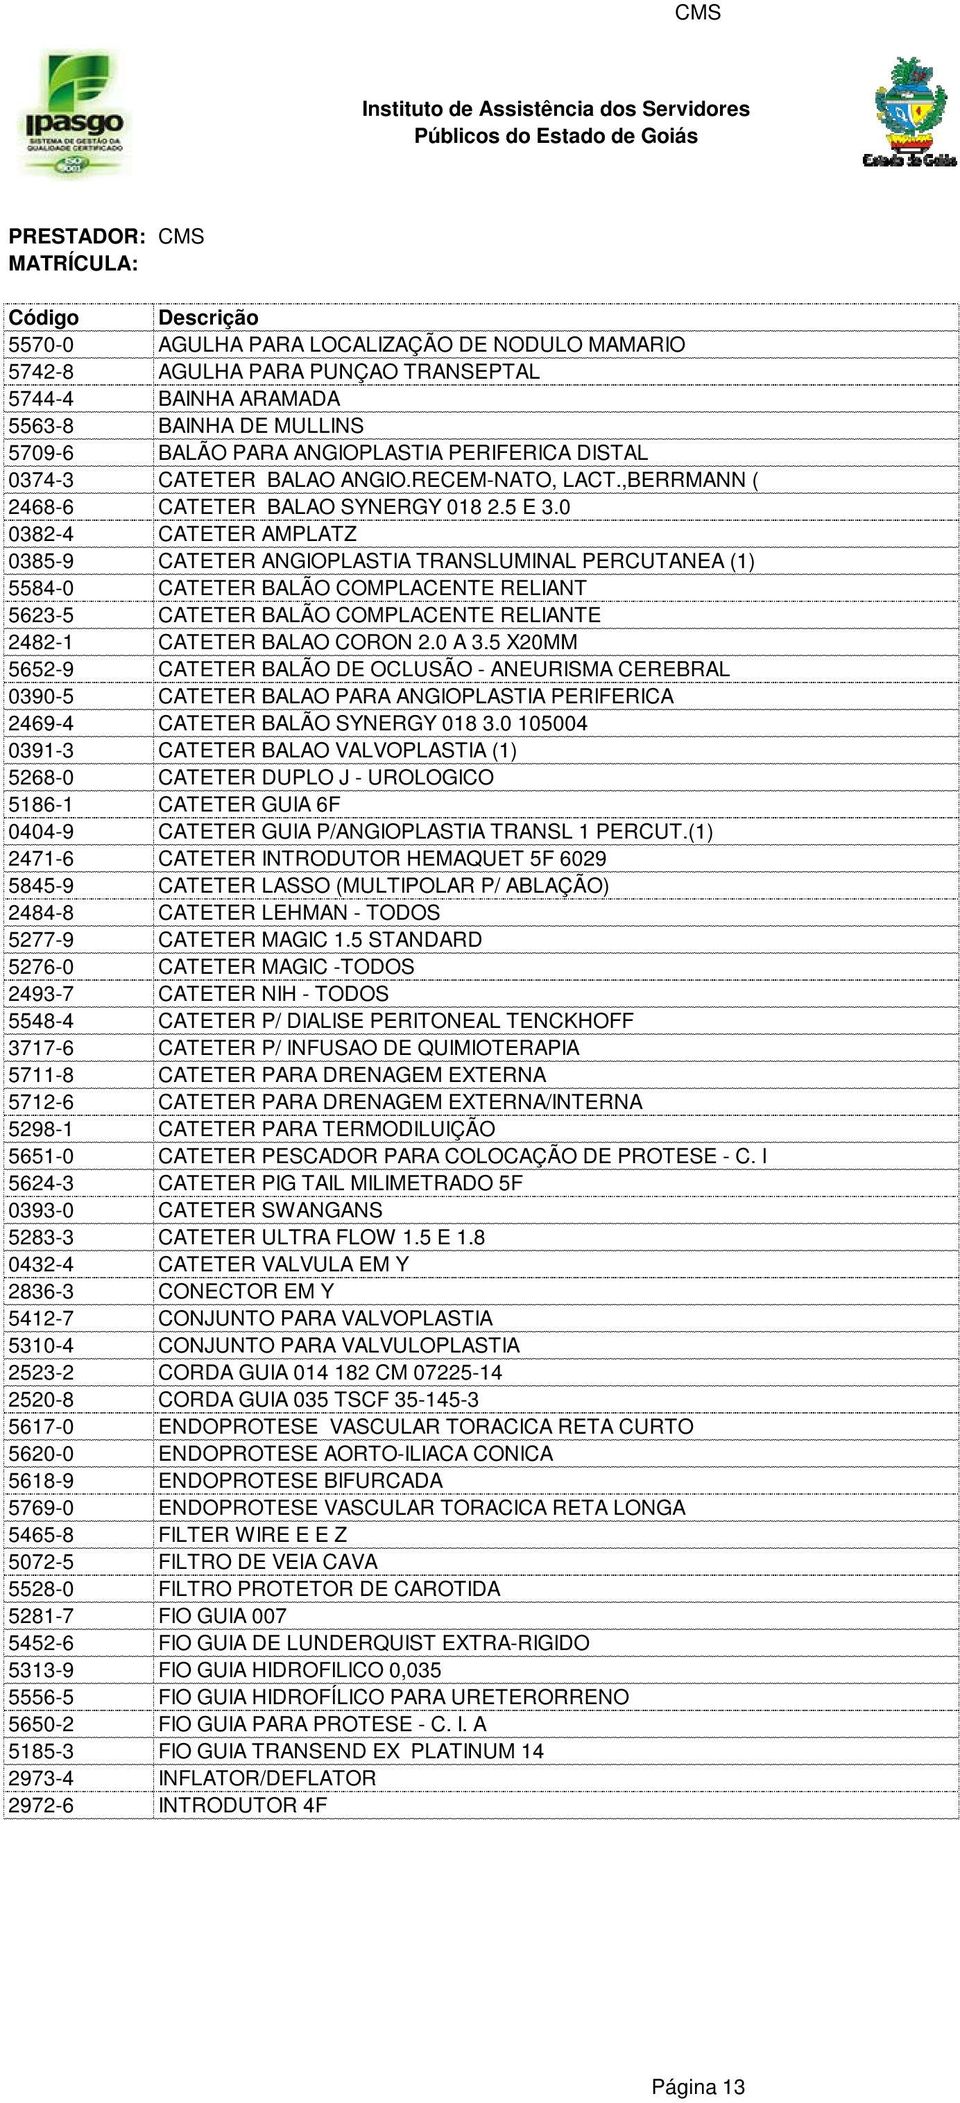 0 0382-4 CATETER AMPLATZ 0385-9 CATETER ANGIOPLASTIA TRANSLUMINAL PERCUTANEA (1) 5584-0 CATETER BALÃO COMPLACENTE RELIANT 5623-5 CATETER BALÃO COMPLACENTE RELIANTE 2482-1 CATETER BALAO CORON 2.0 A 3.